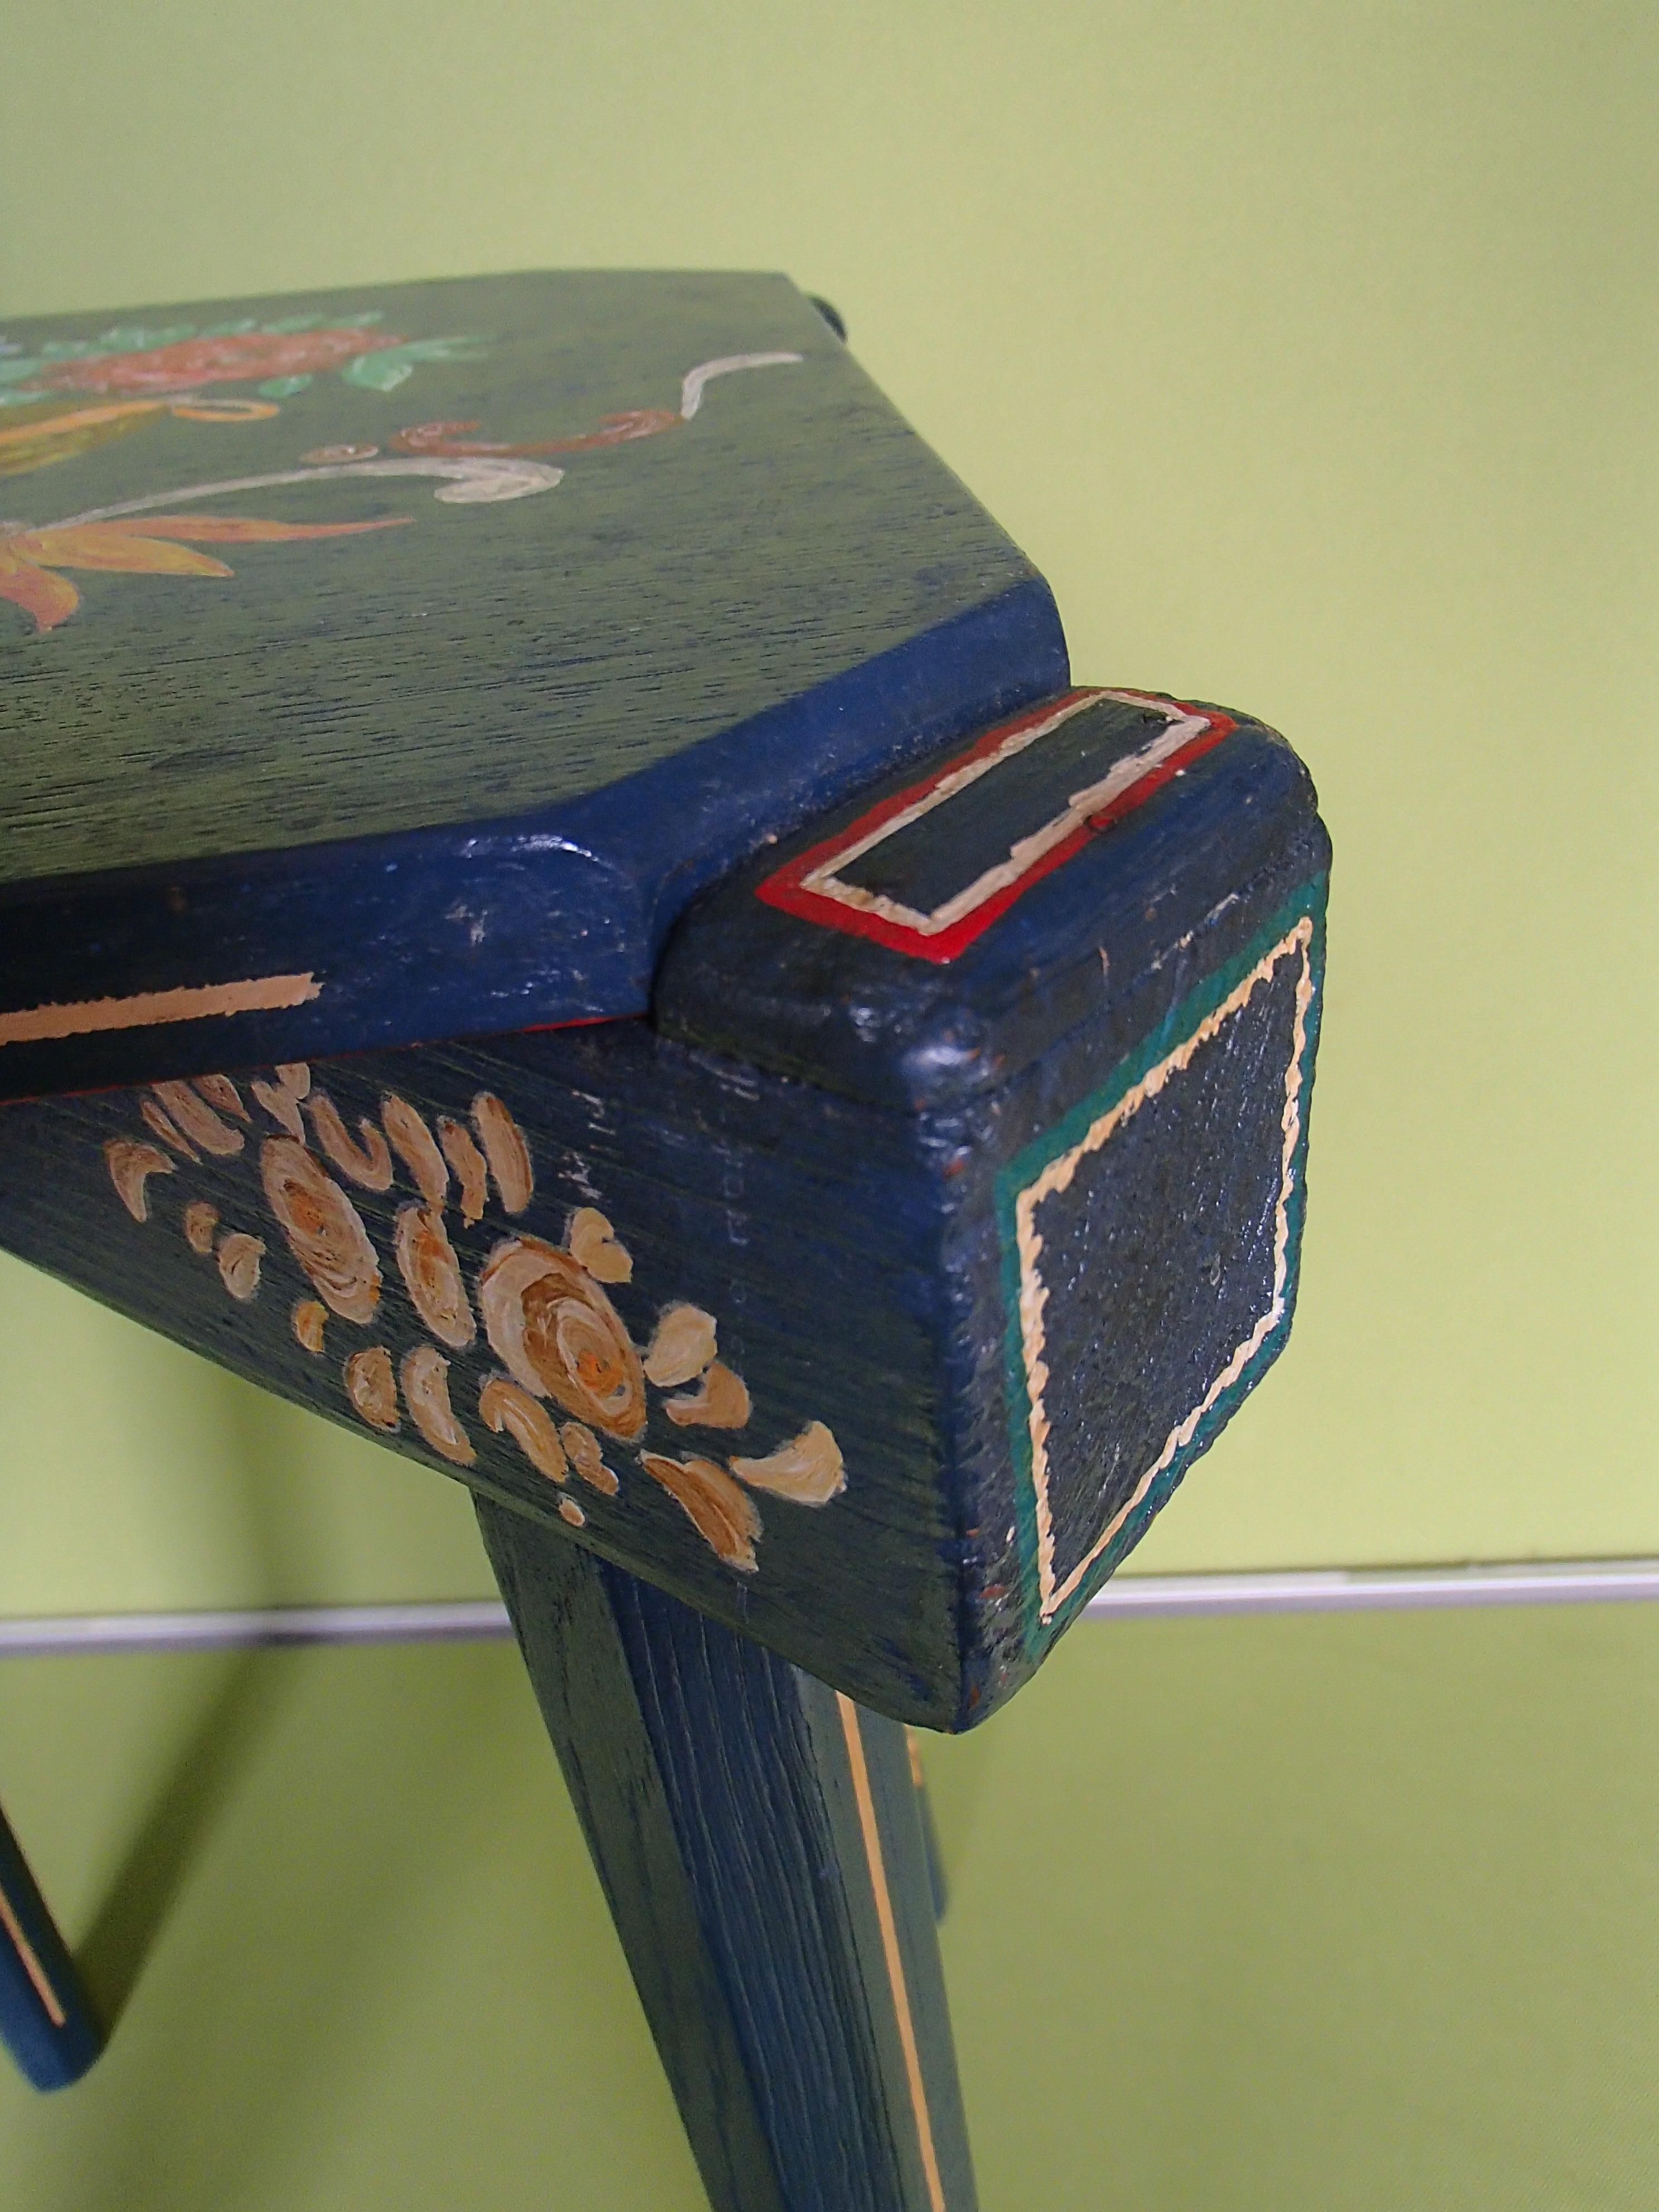 Folk Art 19th century folk art blue wooden stool or side table hand painted flowers For Sale